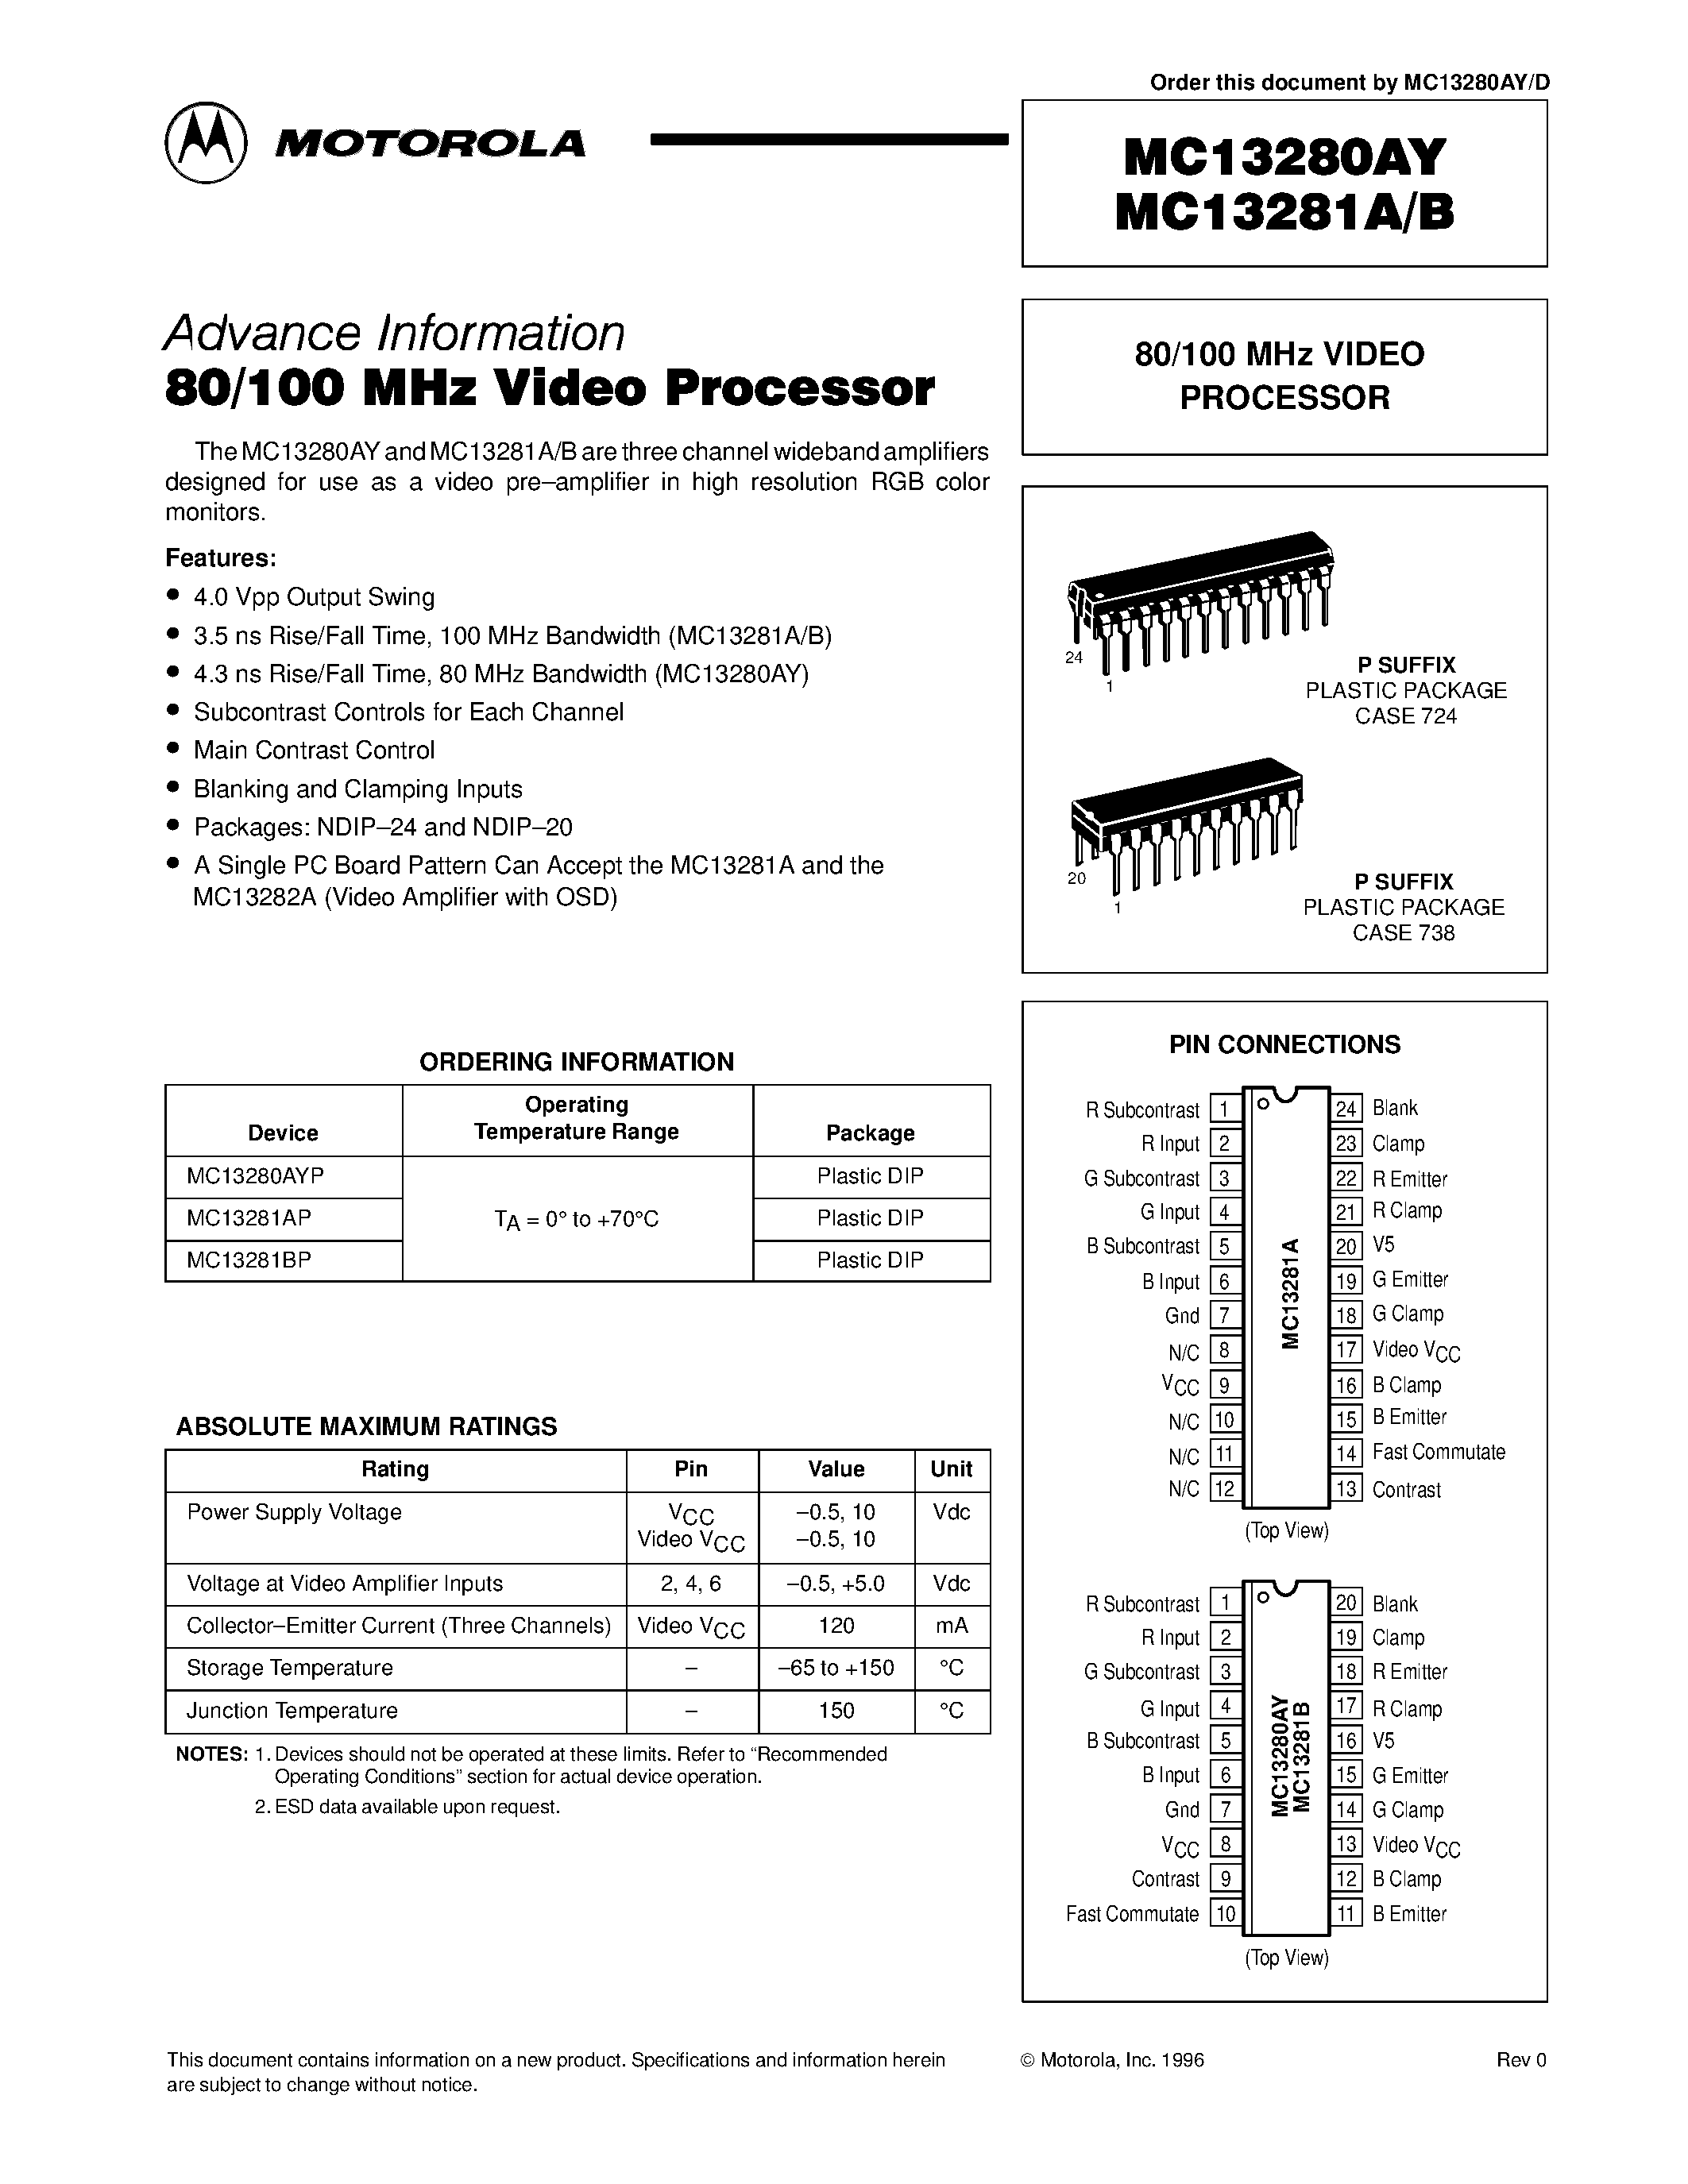 Даташит MC13281AP - 80/100 MHz VIDEO PROCESSOR страница 1